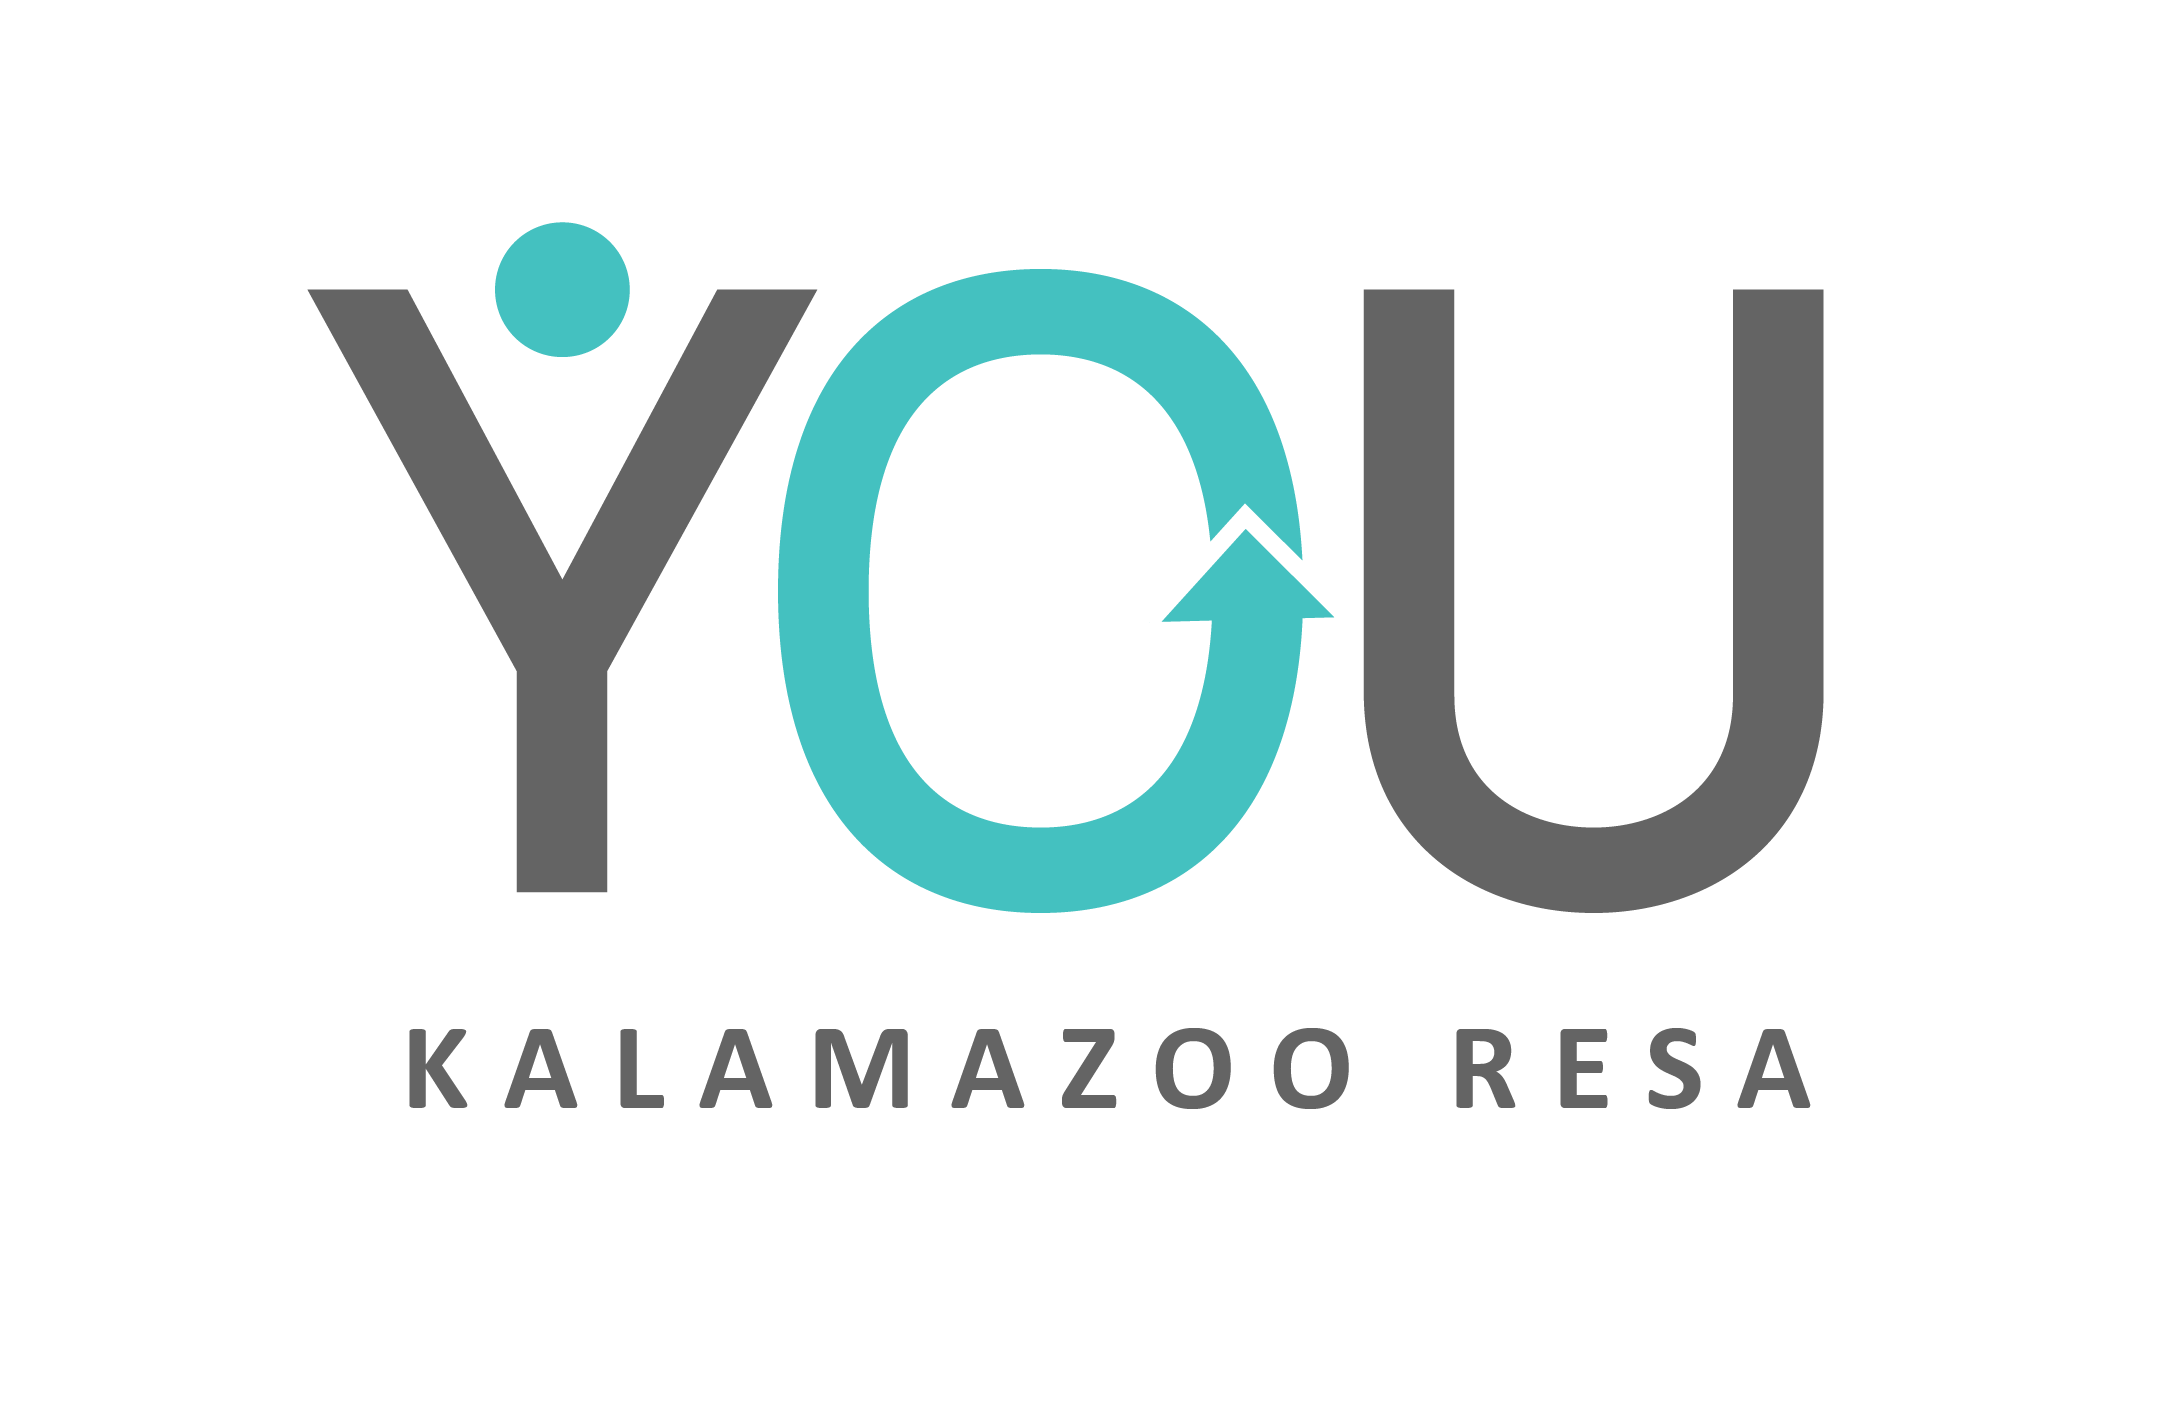 Kalamazoo Logo - Communications / Logo & Template Library